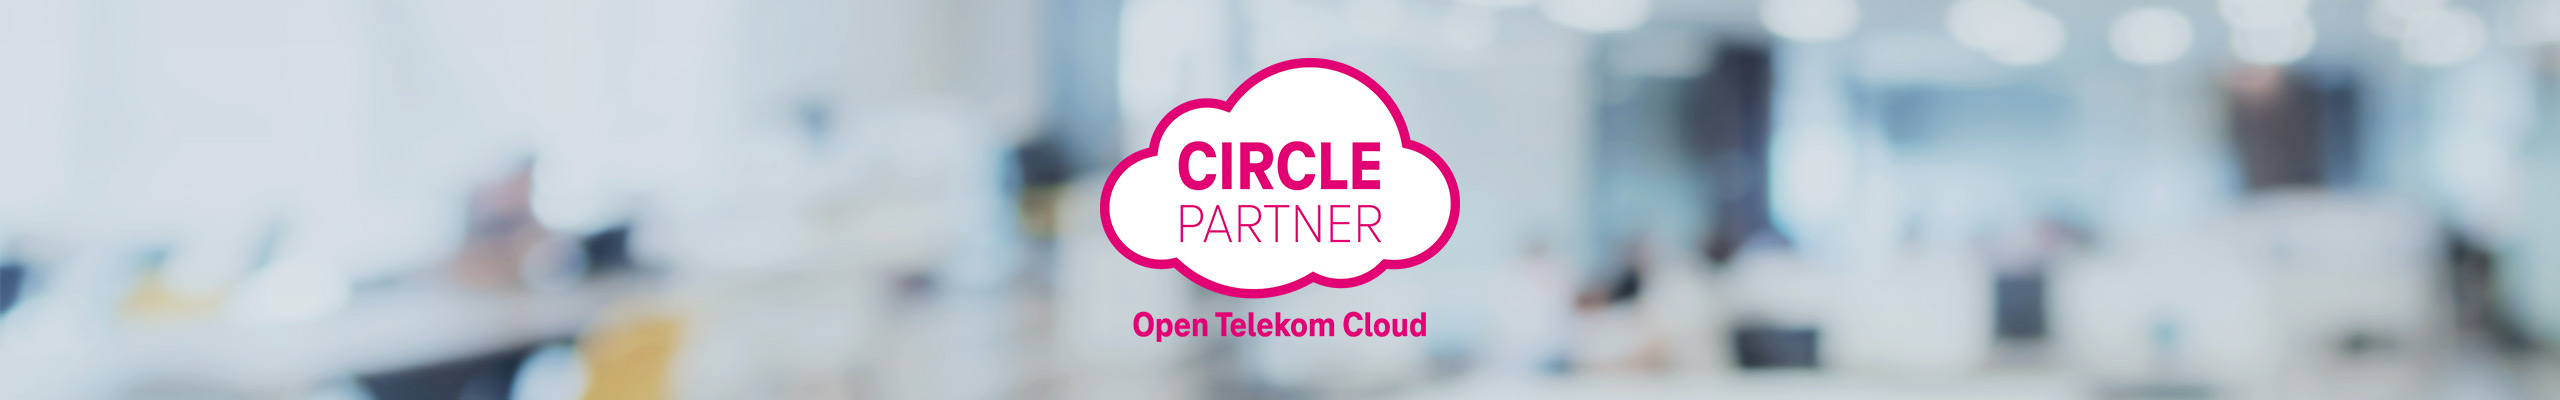 Circle Partner Logo der Open Telekom Cloud